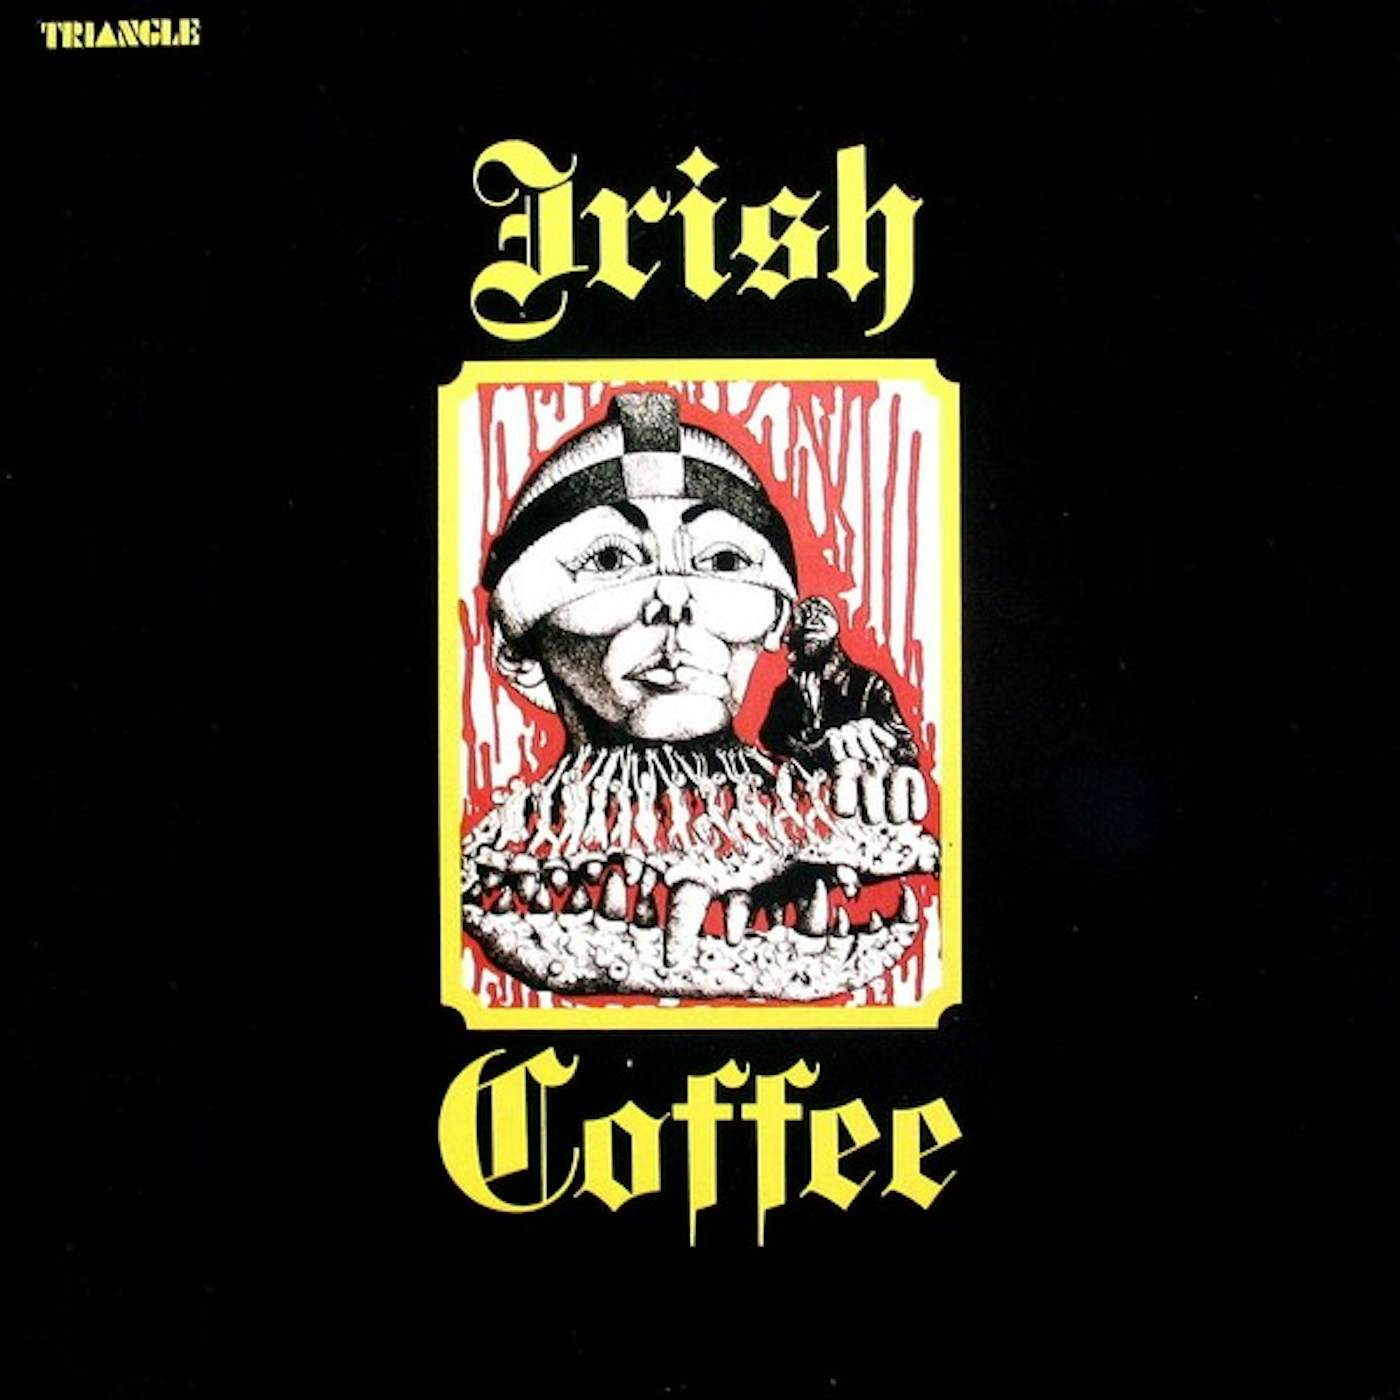  Irish Coffee Vinyl Record